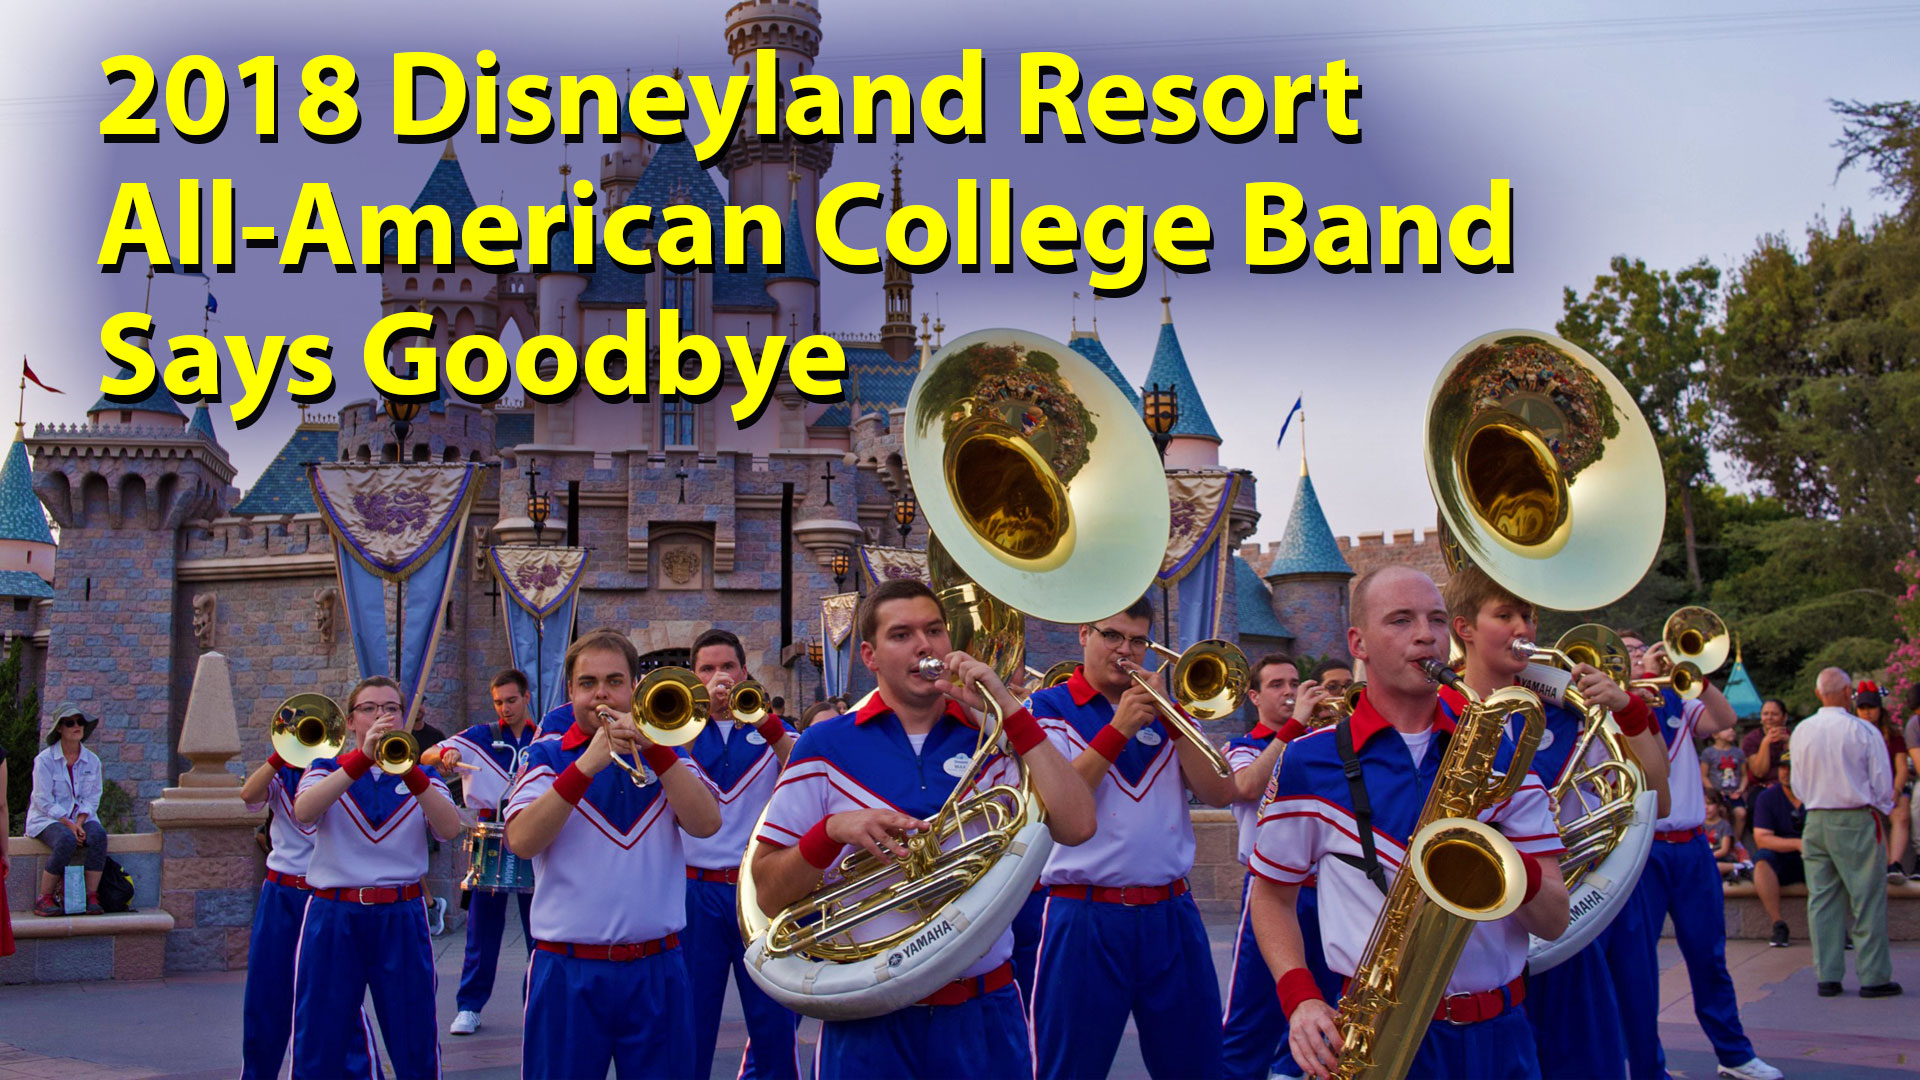 The 2018 Disneyland Resort All-American College Band Says Goodbye